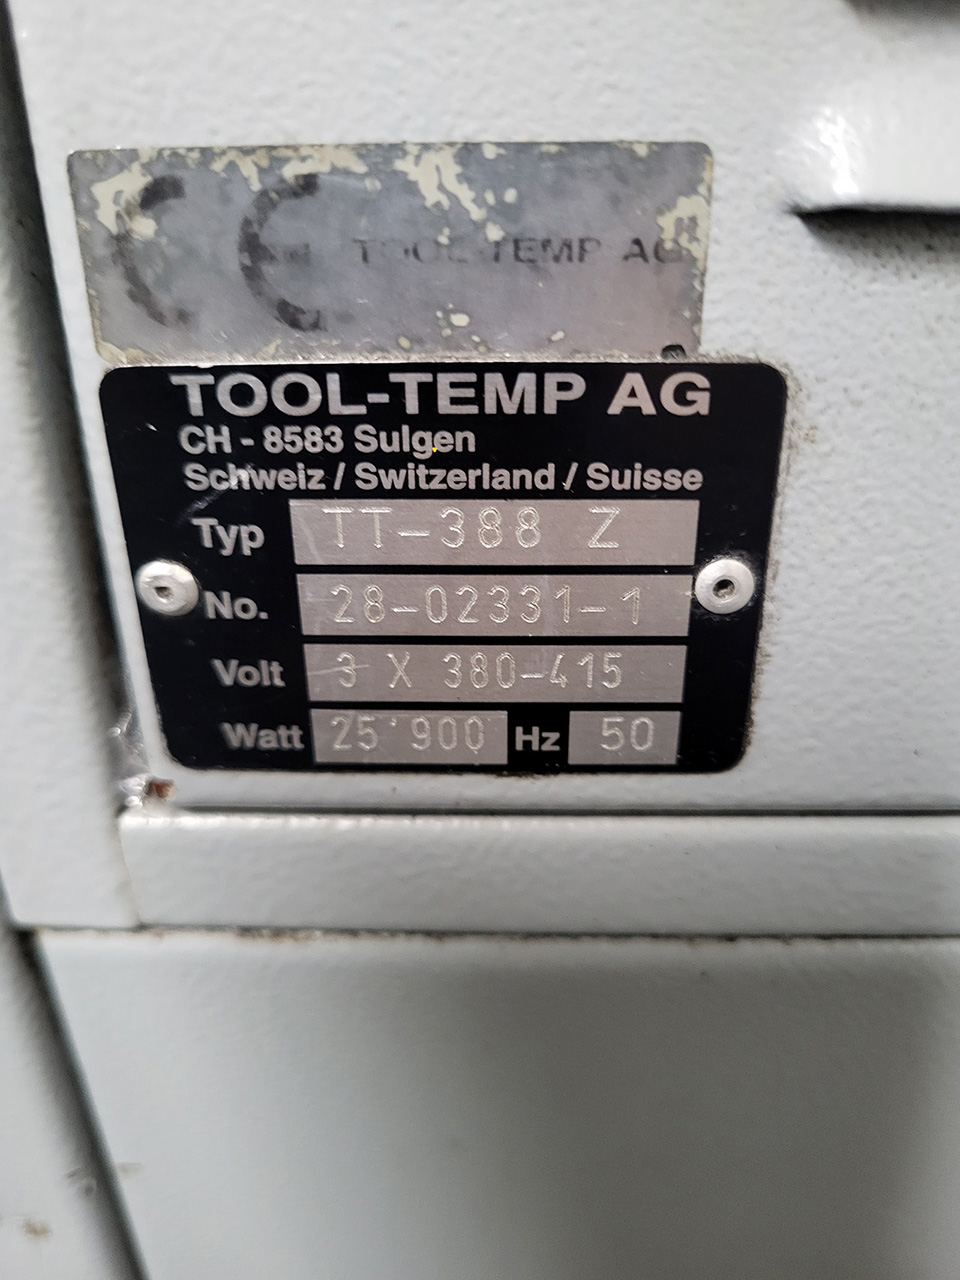 Jednostka kontroli temperatury ToolTemp TT-388 ZU2230, używana